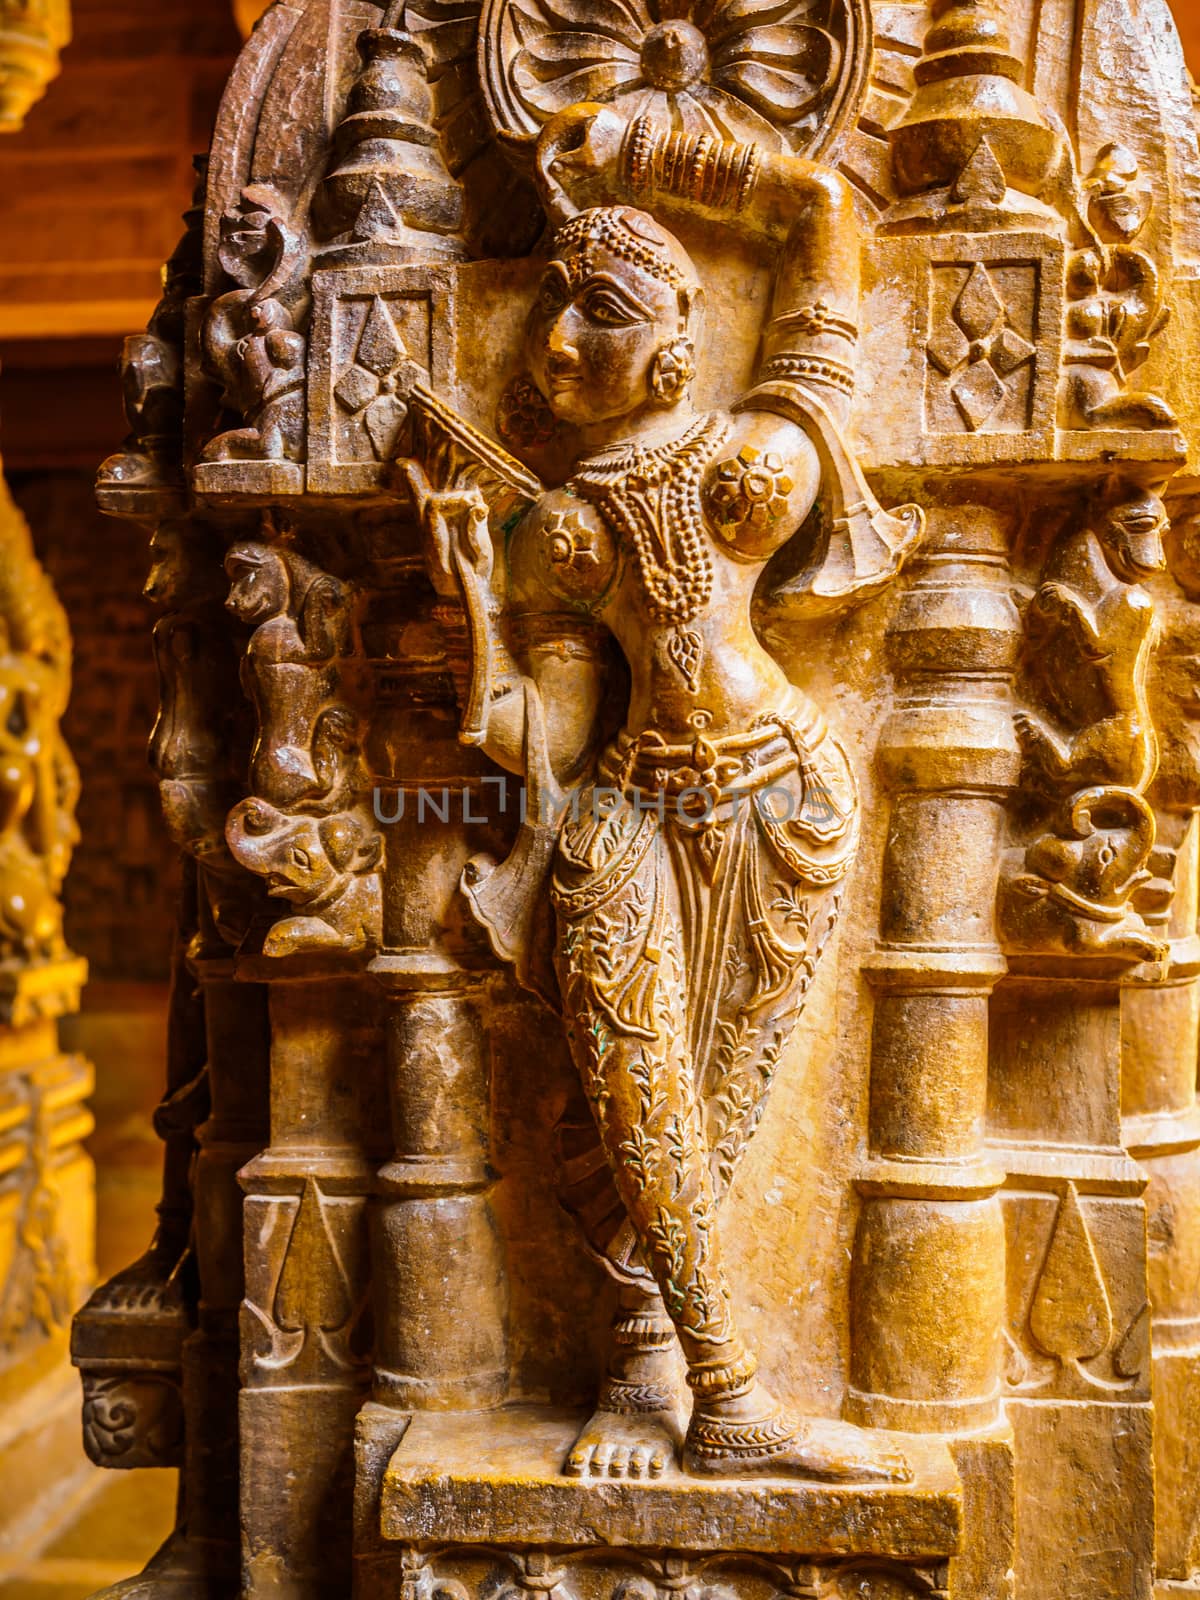 Sculpture in Jain Temple by takepicsforfun